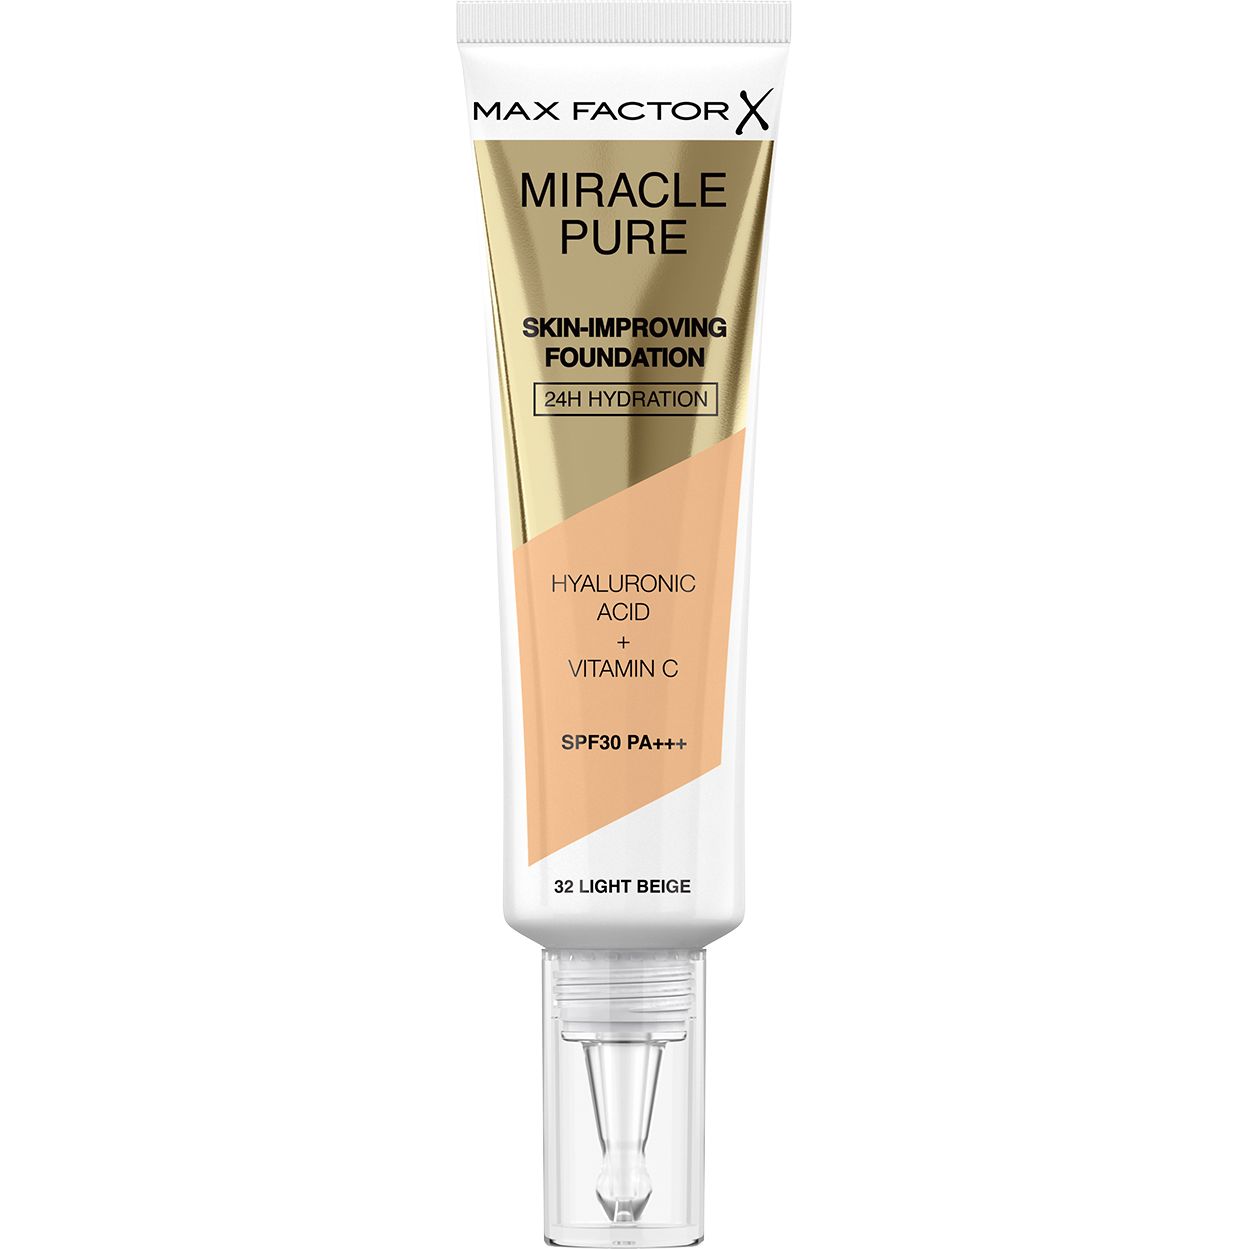 Тональная основа Max Factor Miracle Pure Skin-Improving Foundation SPF30 тон 032 (Light Beige) 30 мл - фото 1